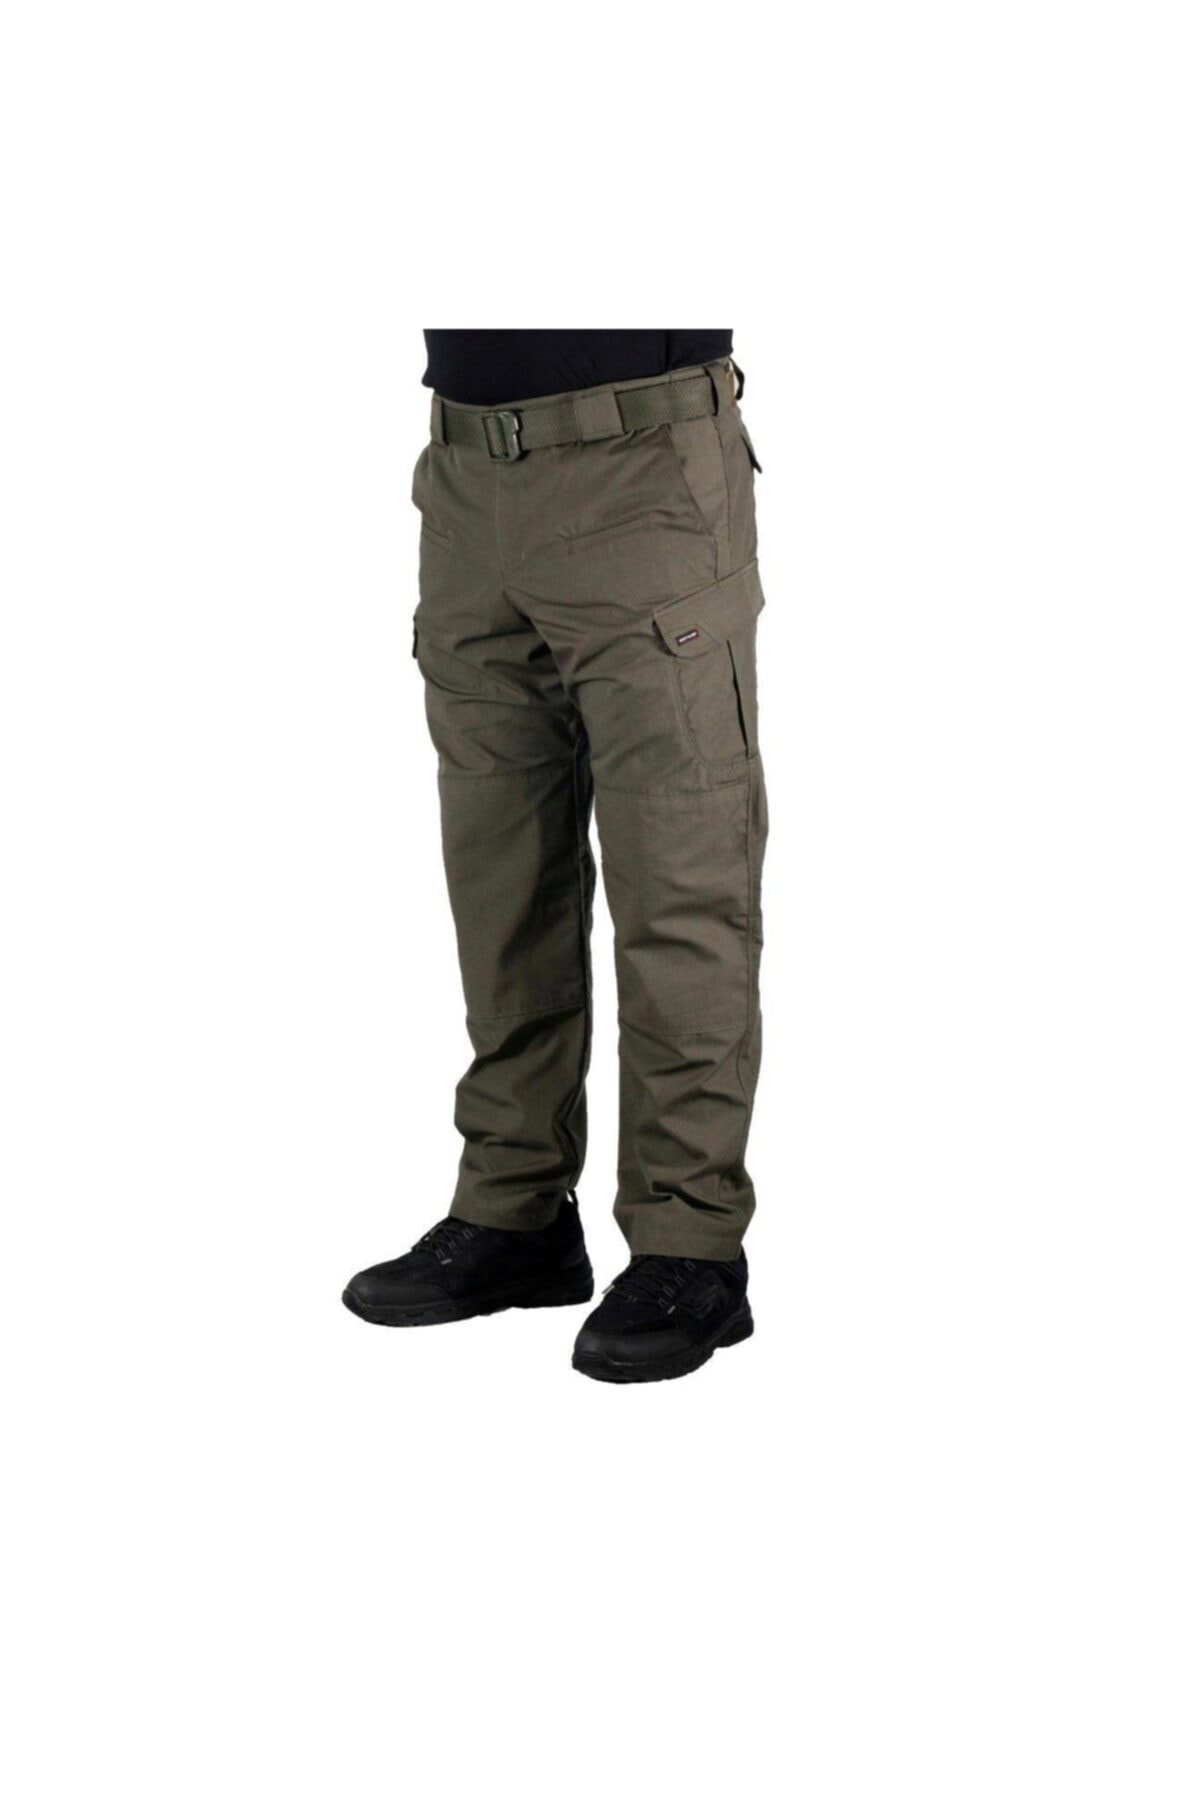 Silyon Askeri Giyim Erkek Haki Taktik Pantolon 4 Mevsim Giyilebilir Taktikal Pantolon Tactical Pantolon